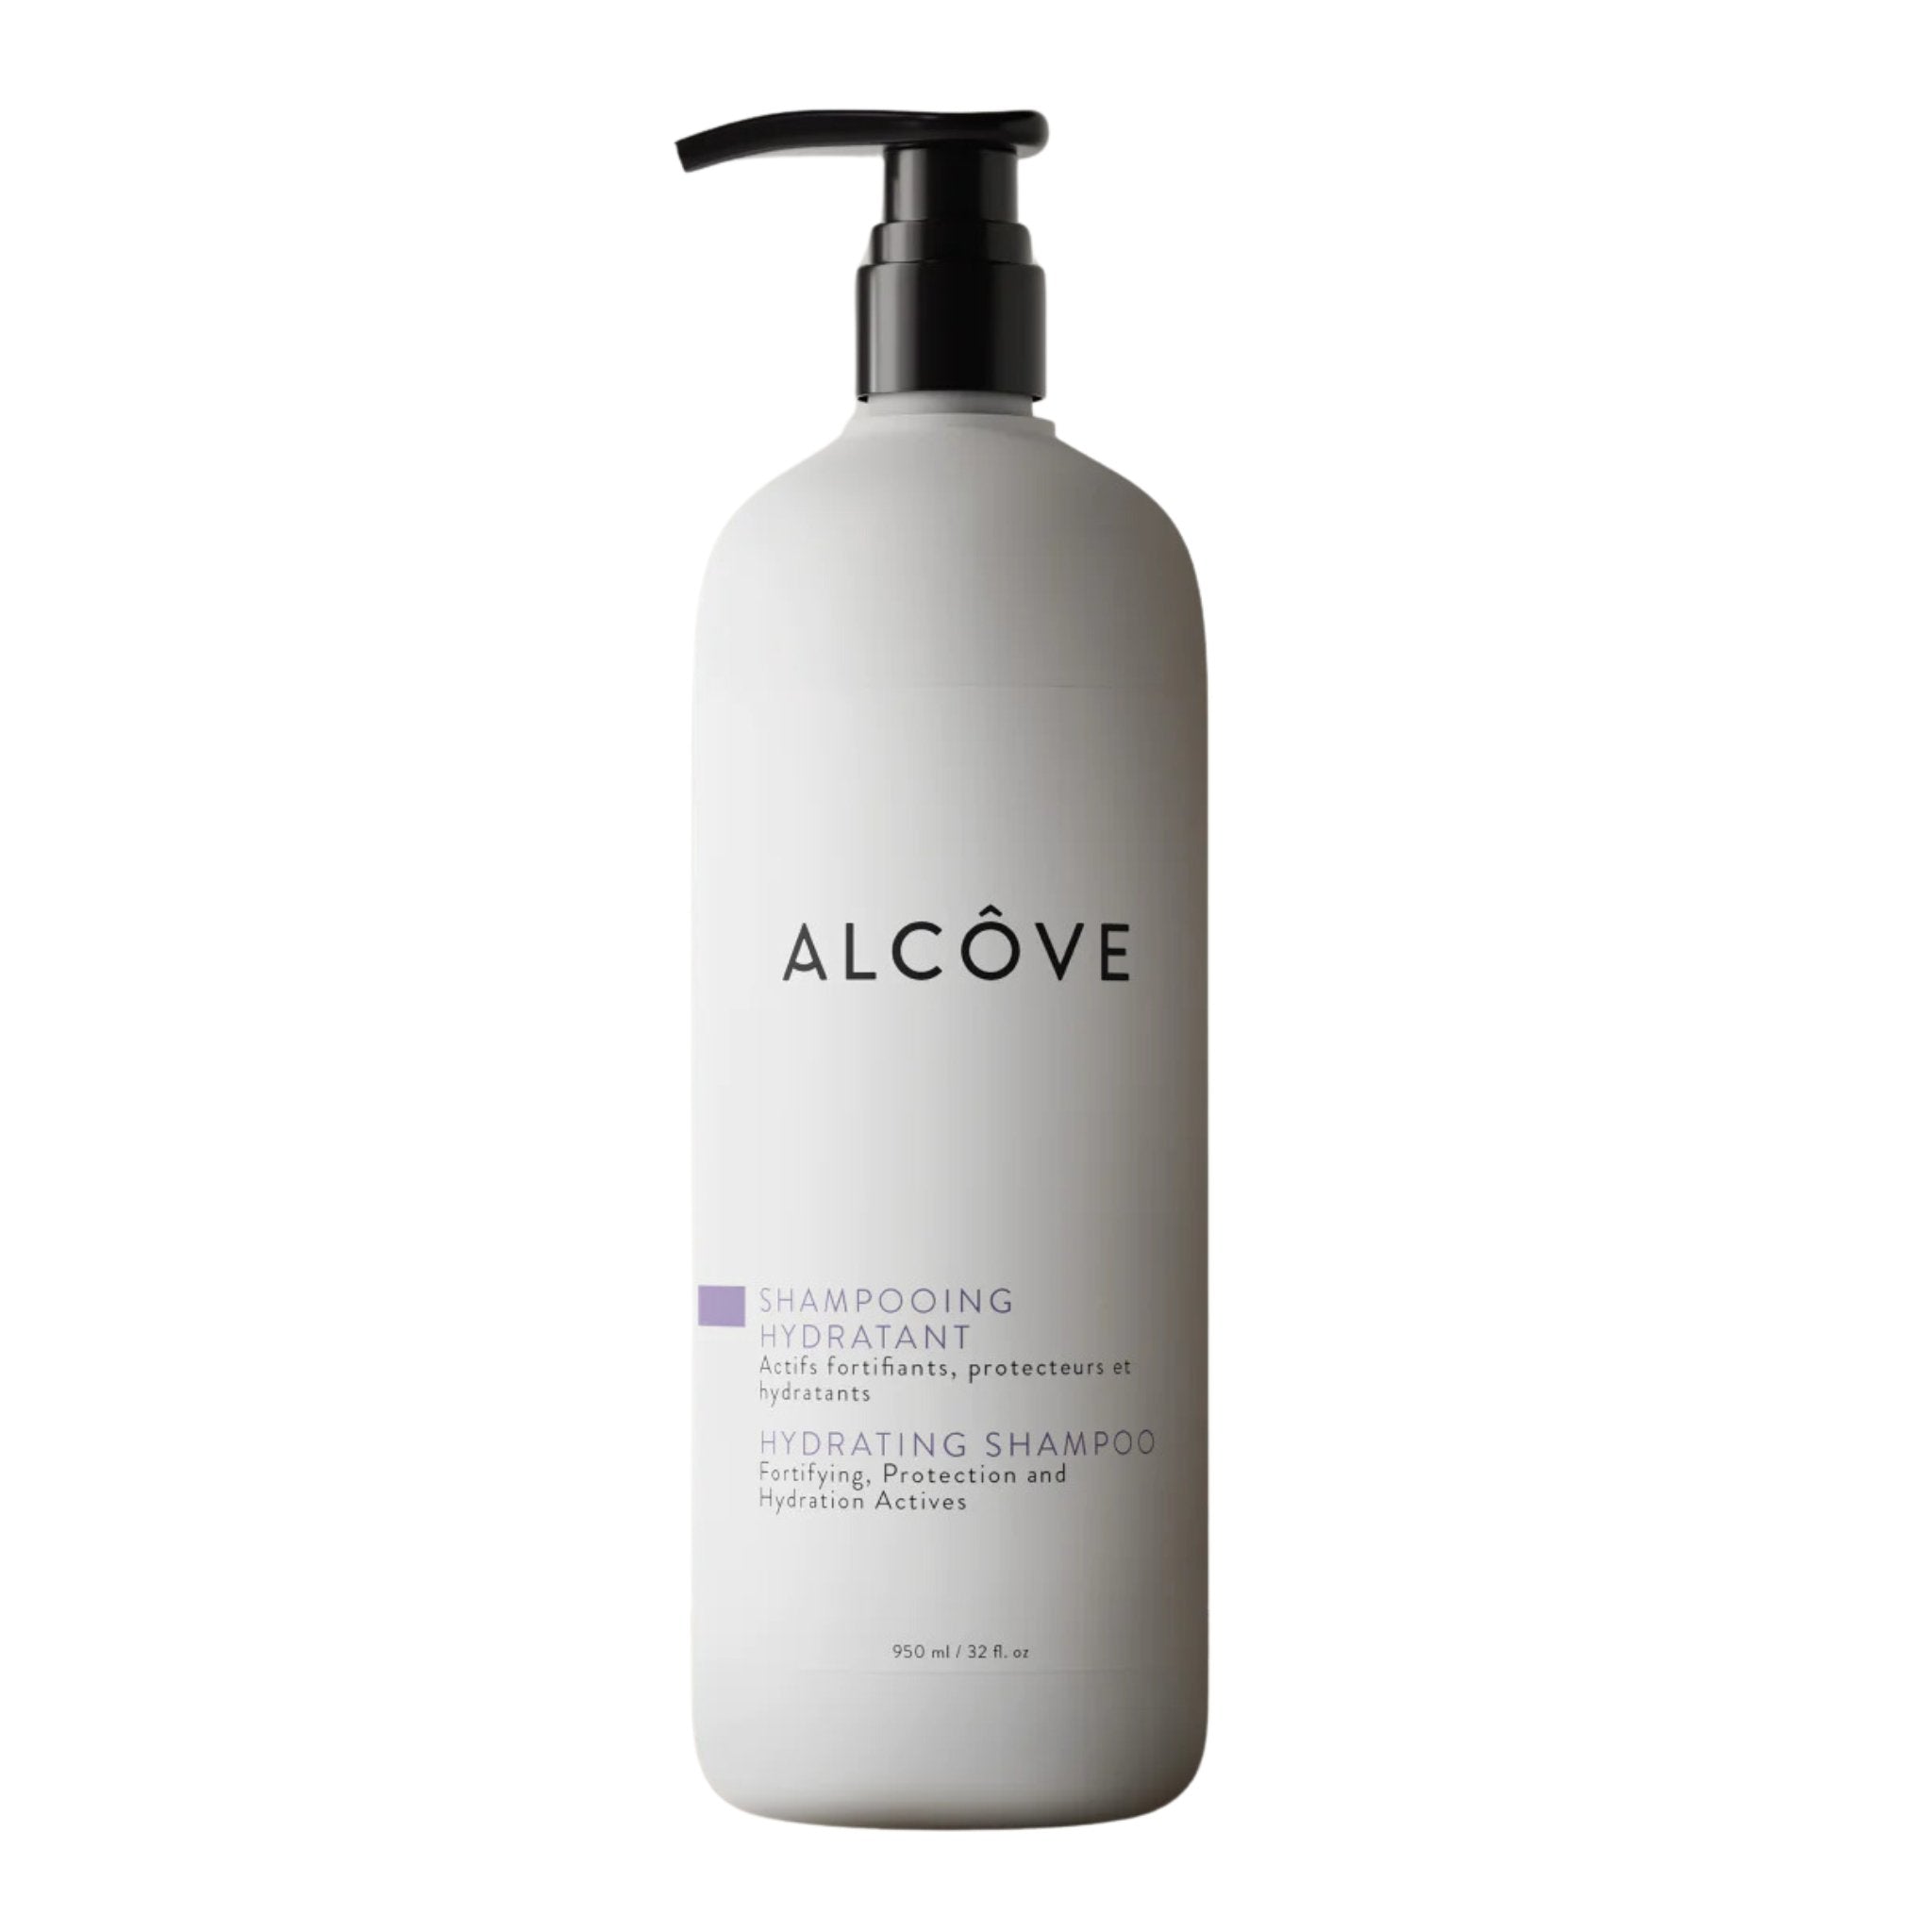 WELLA INVIGO AQUA PURE Purifying Shampoo - Industria Coiffure Hair Products